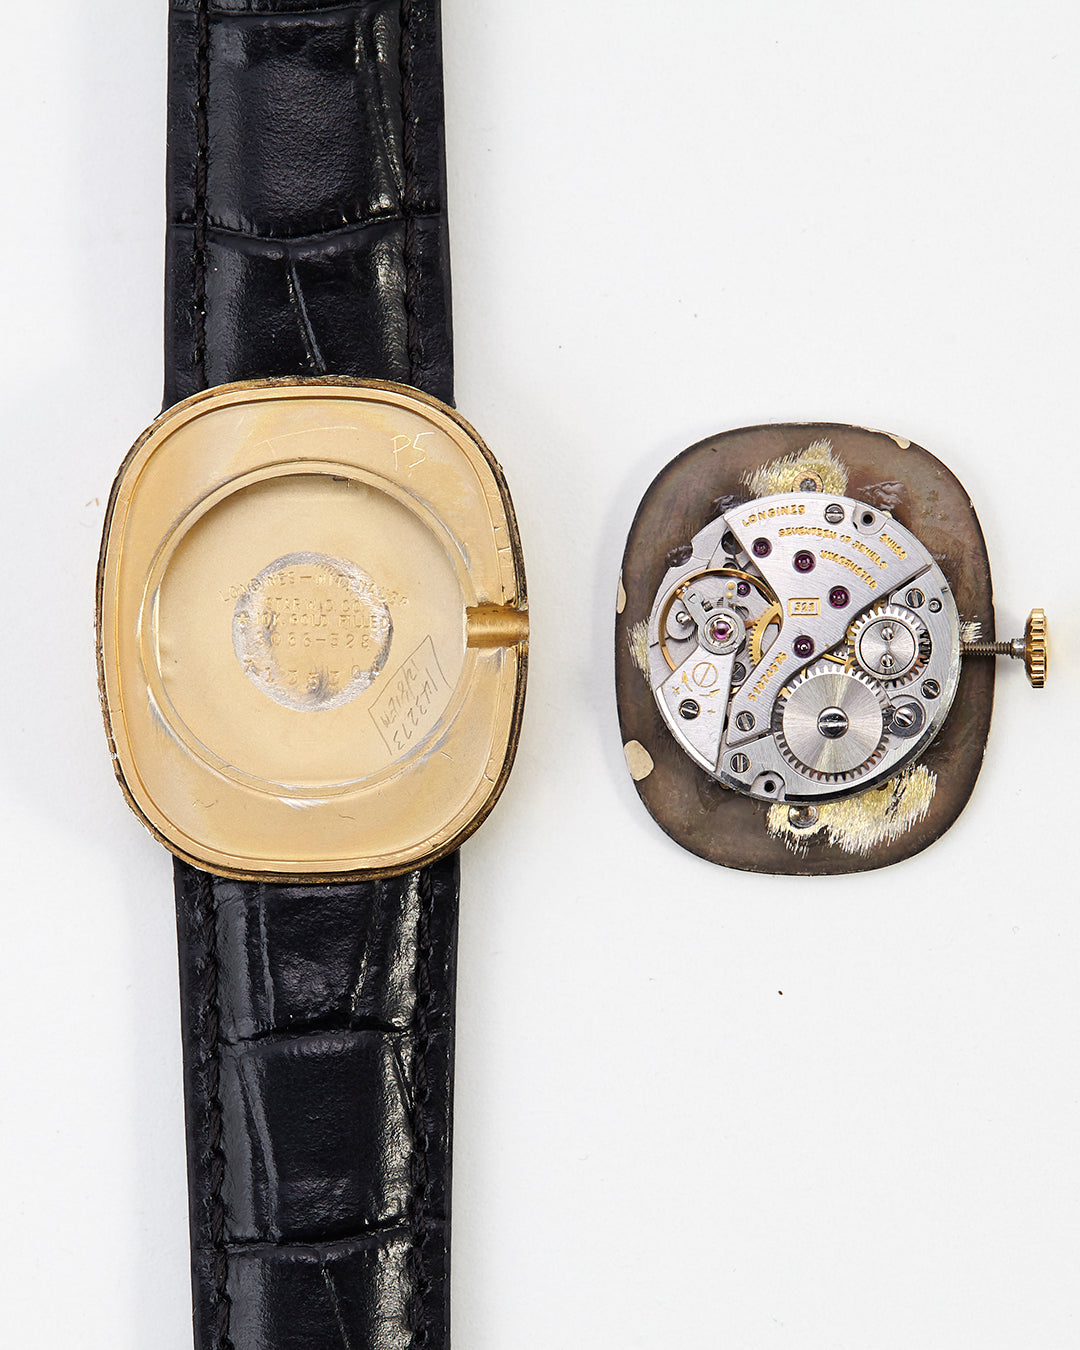 Longines Ellipse Vintage Manual-Wind Wristwatch c.1970s